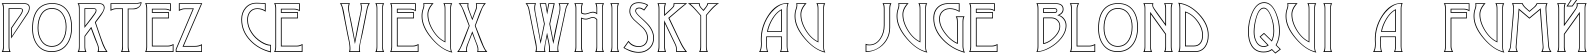 Пример написания шрифтом DesdemonaC текста на французском